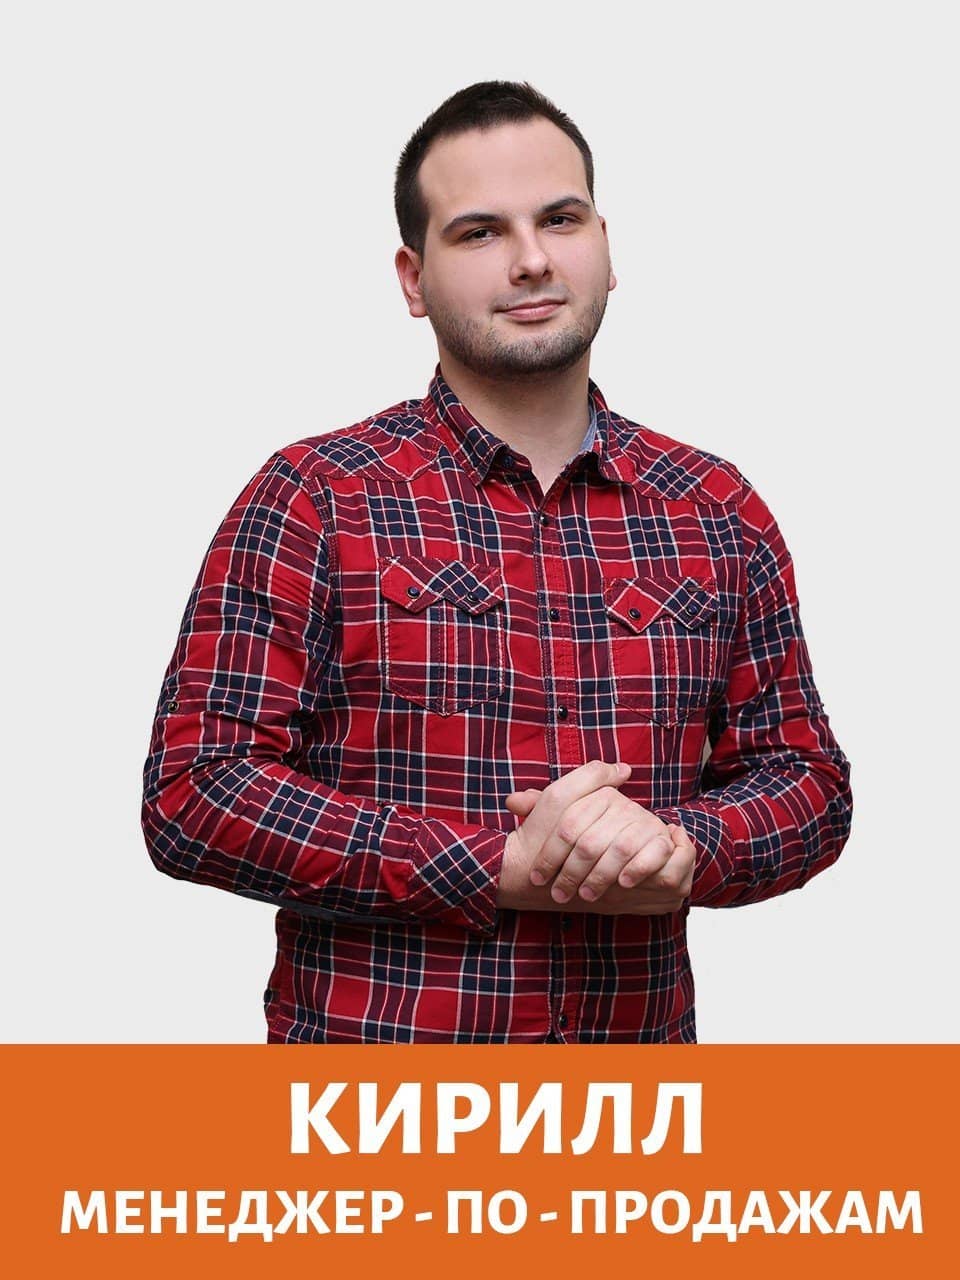 kirill menedzhe po prodazham - Создание и разработка сайтов в Актобе